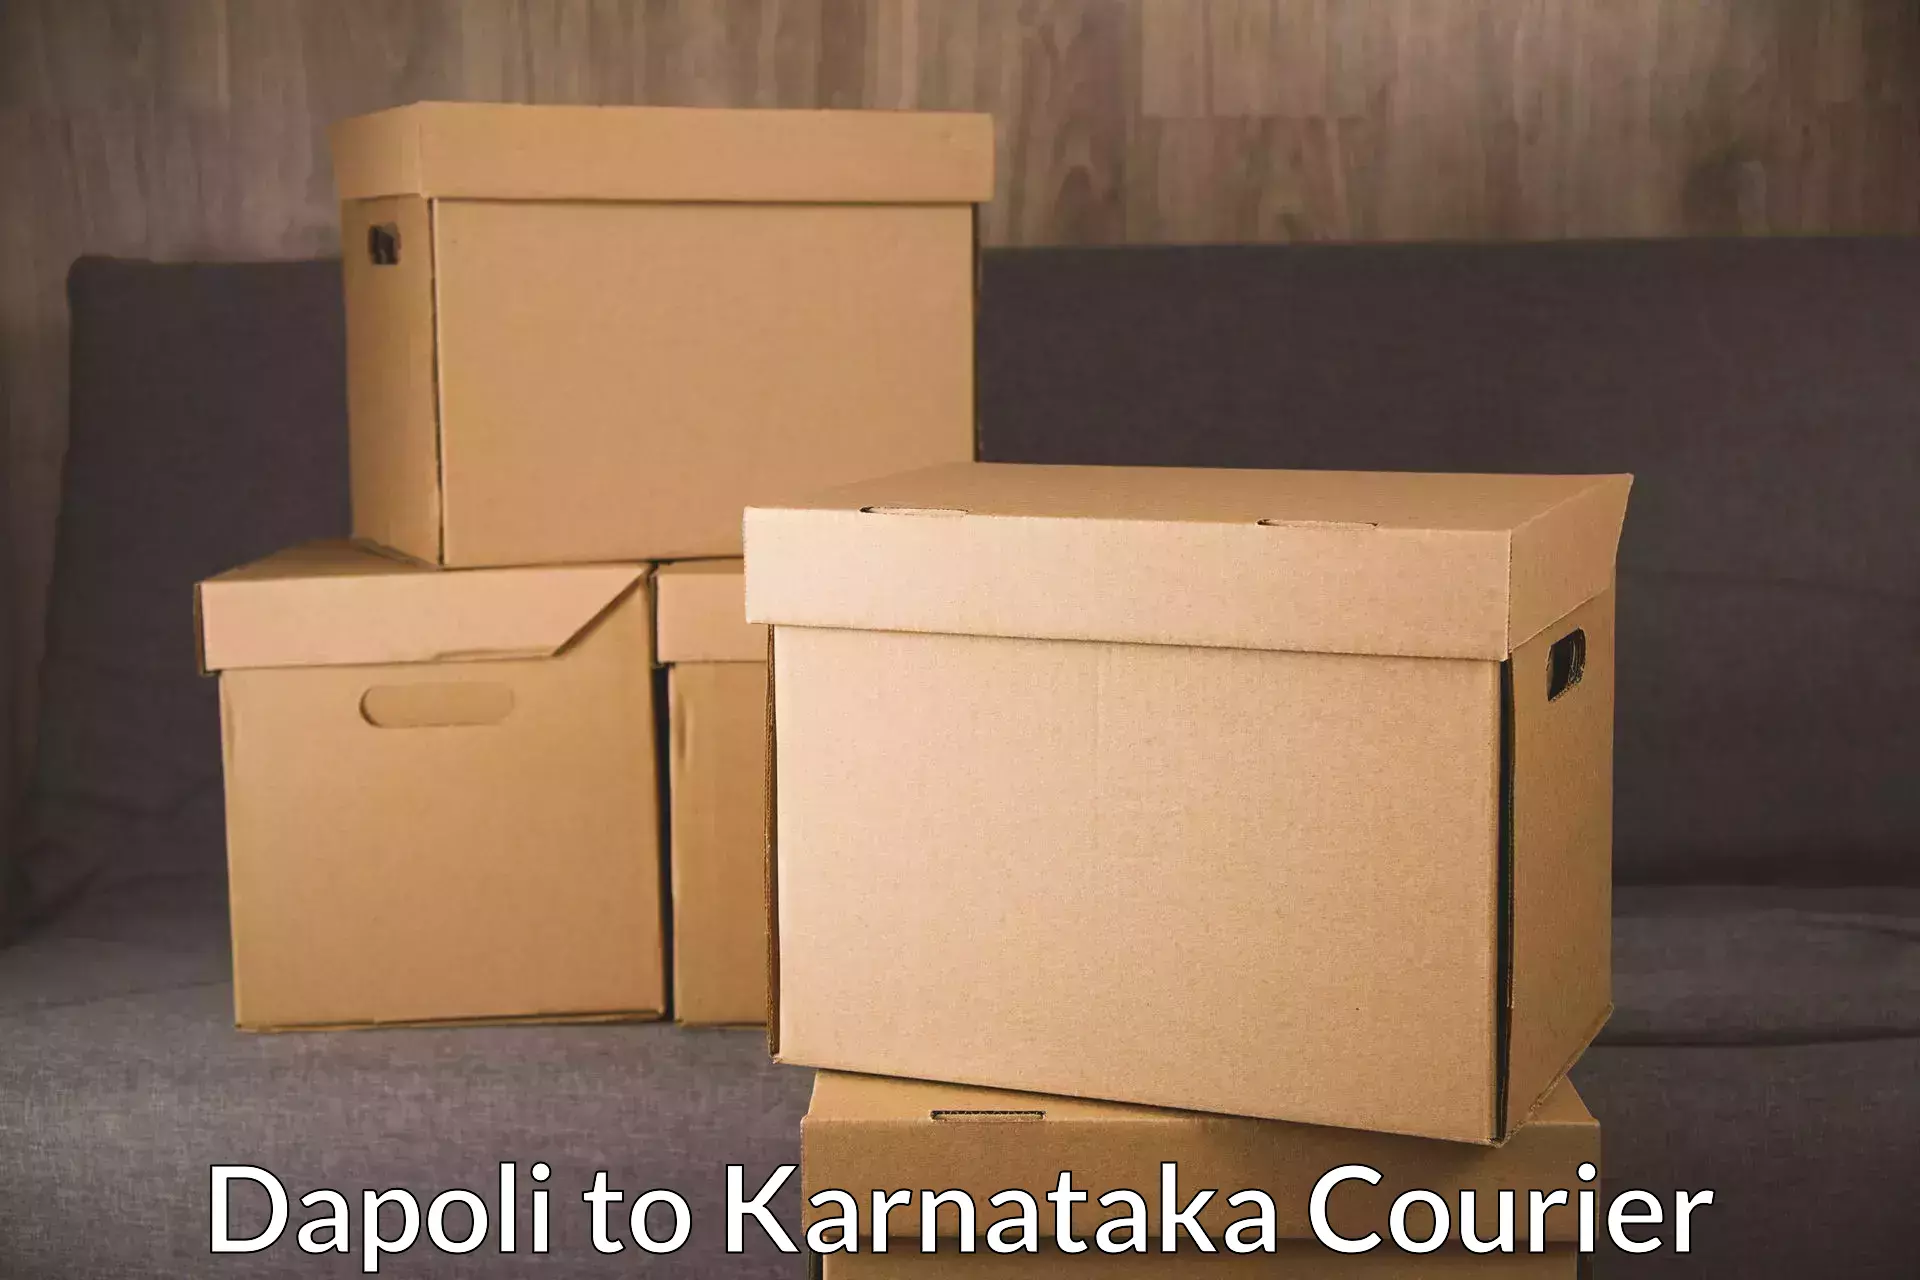 High-priority parcel service Dapoli to Karnataka